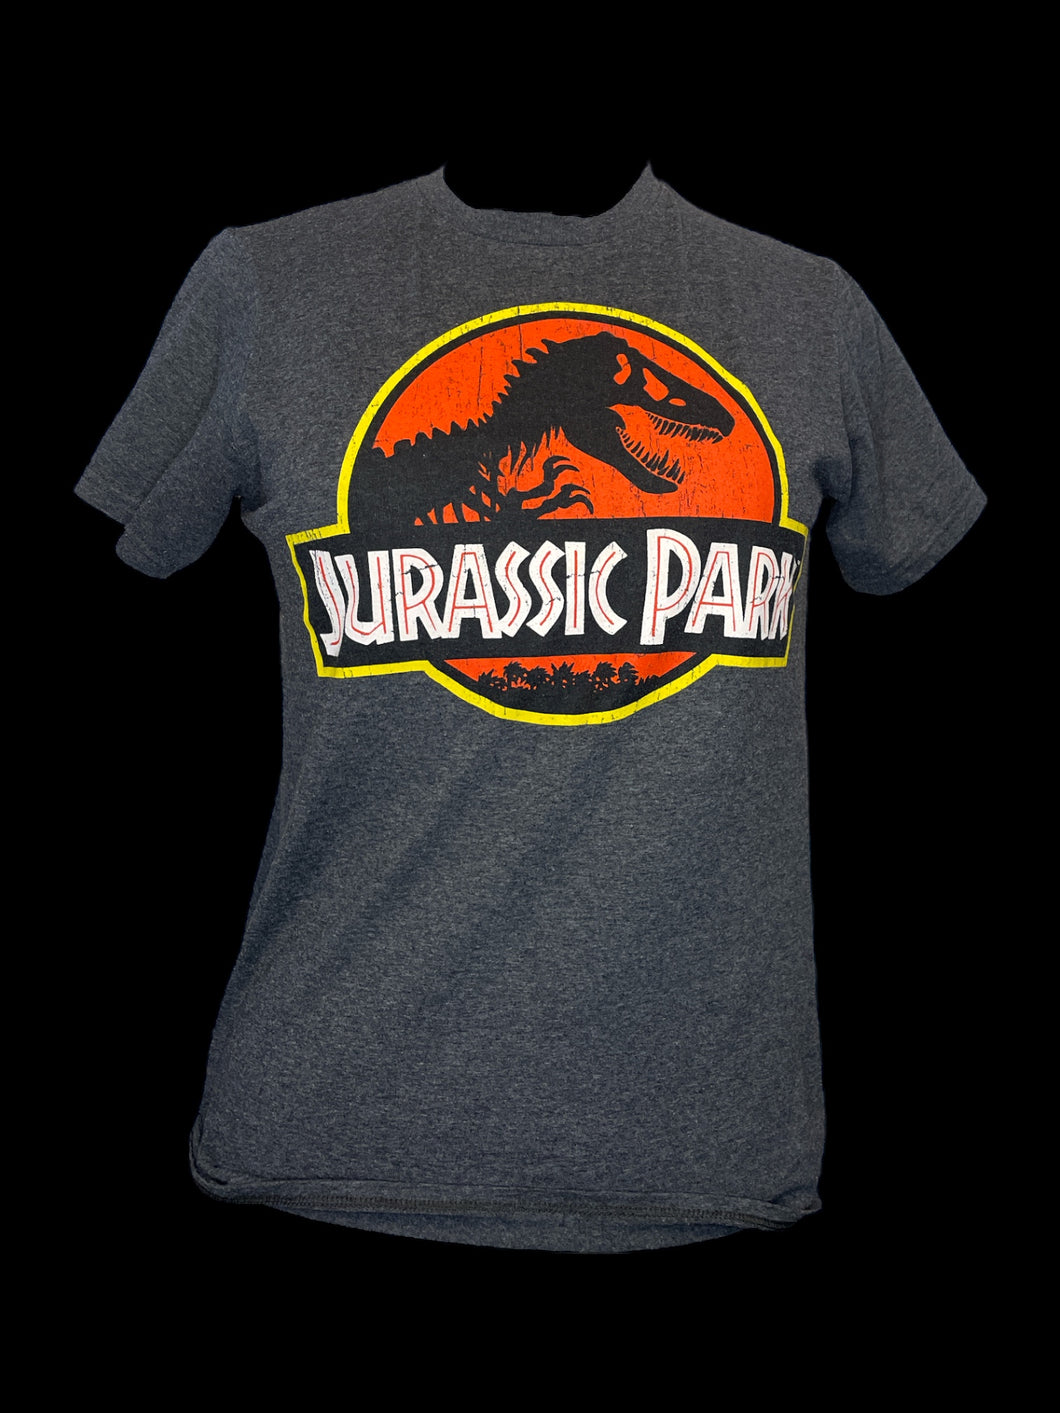 M Heather grey short sleeve crew neck top w/ “Jurassic Park” logo graphic